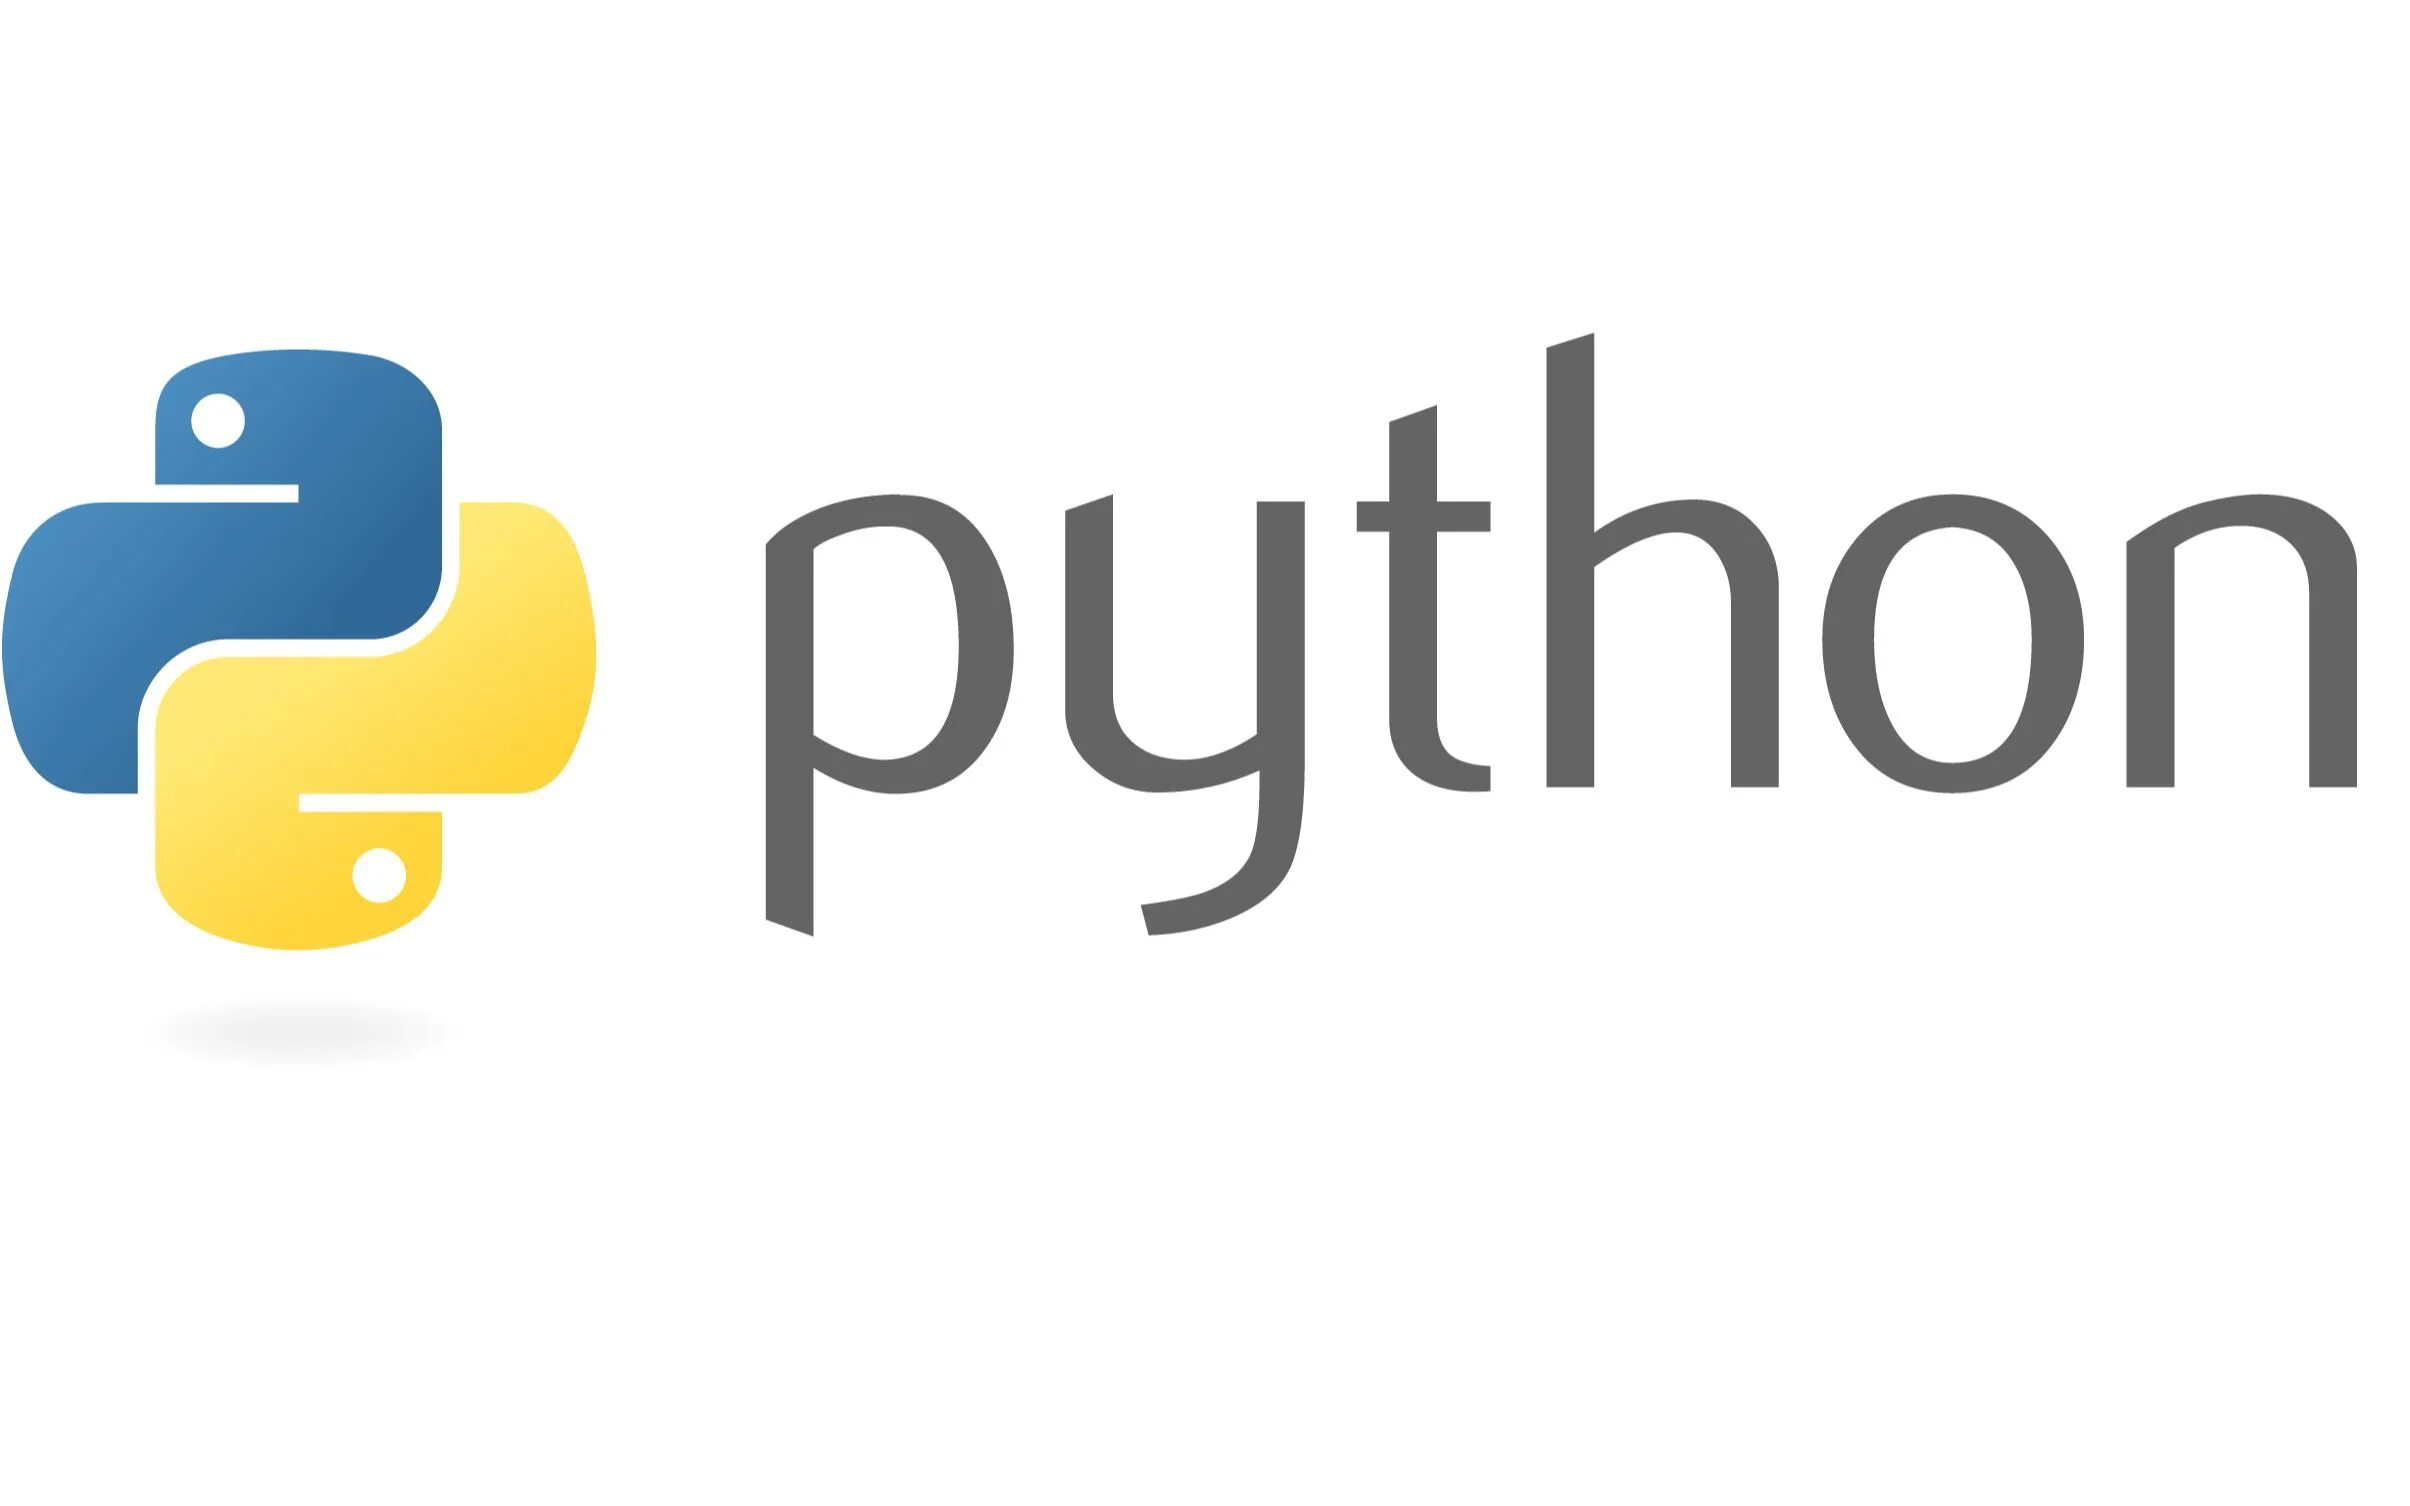 Python icon. Значок Python. Python язык программирования логотип. Логотип Python без фона. Python 3 PNG.